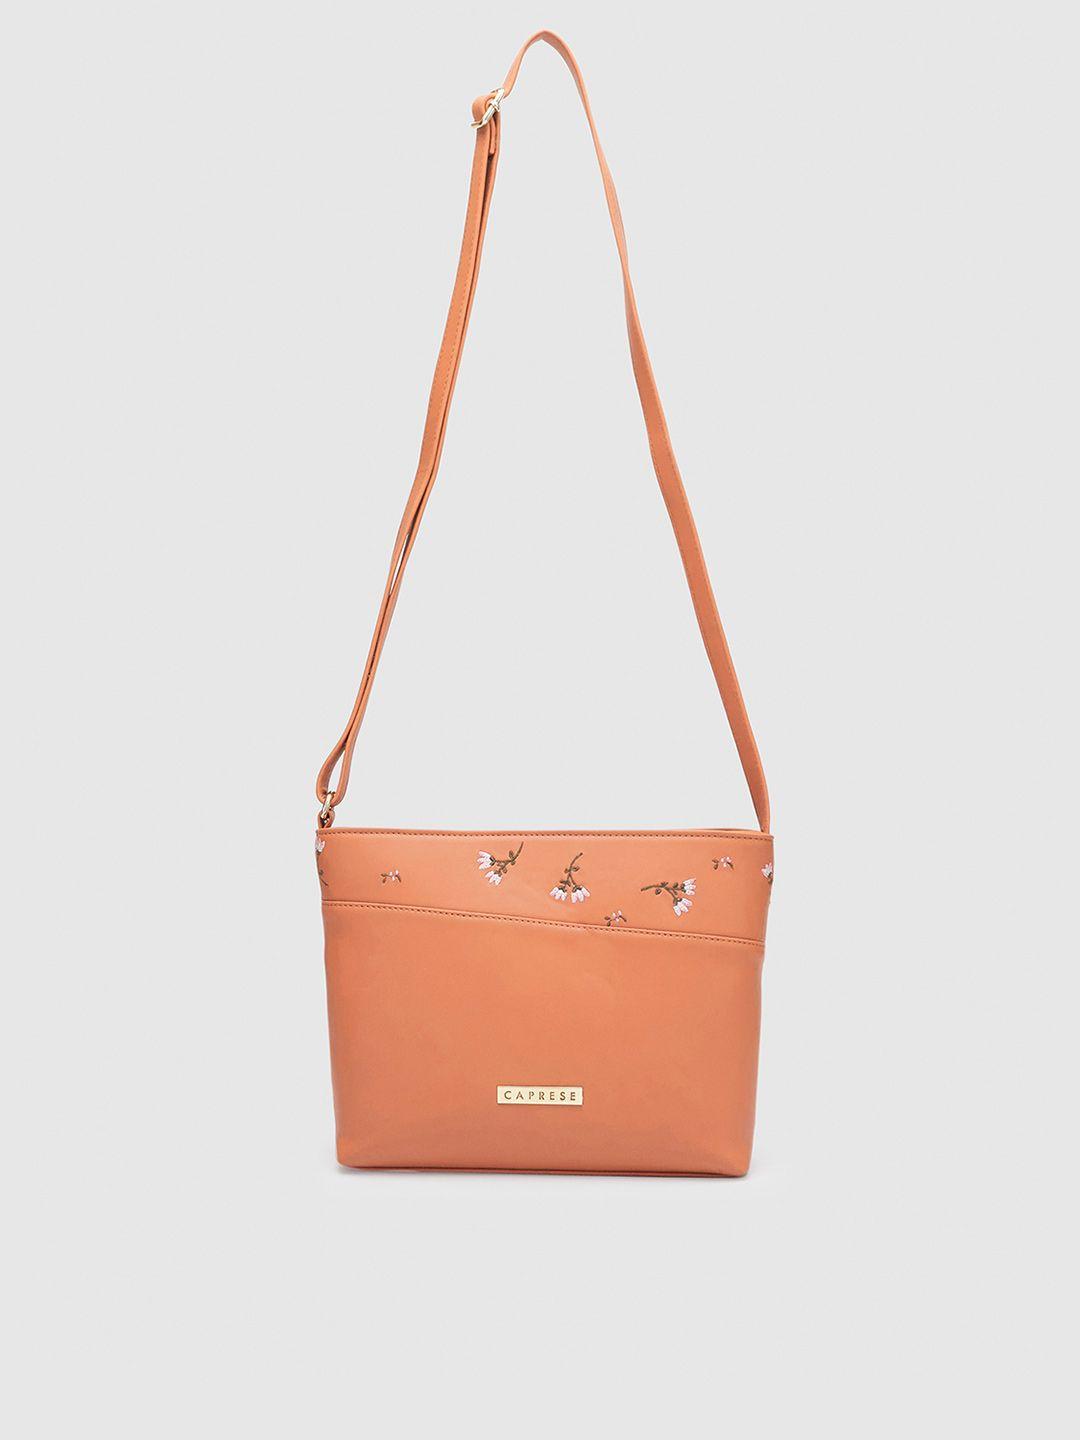 caprese leather structured sling bag